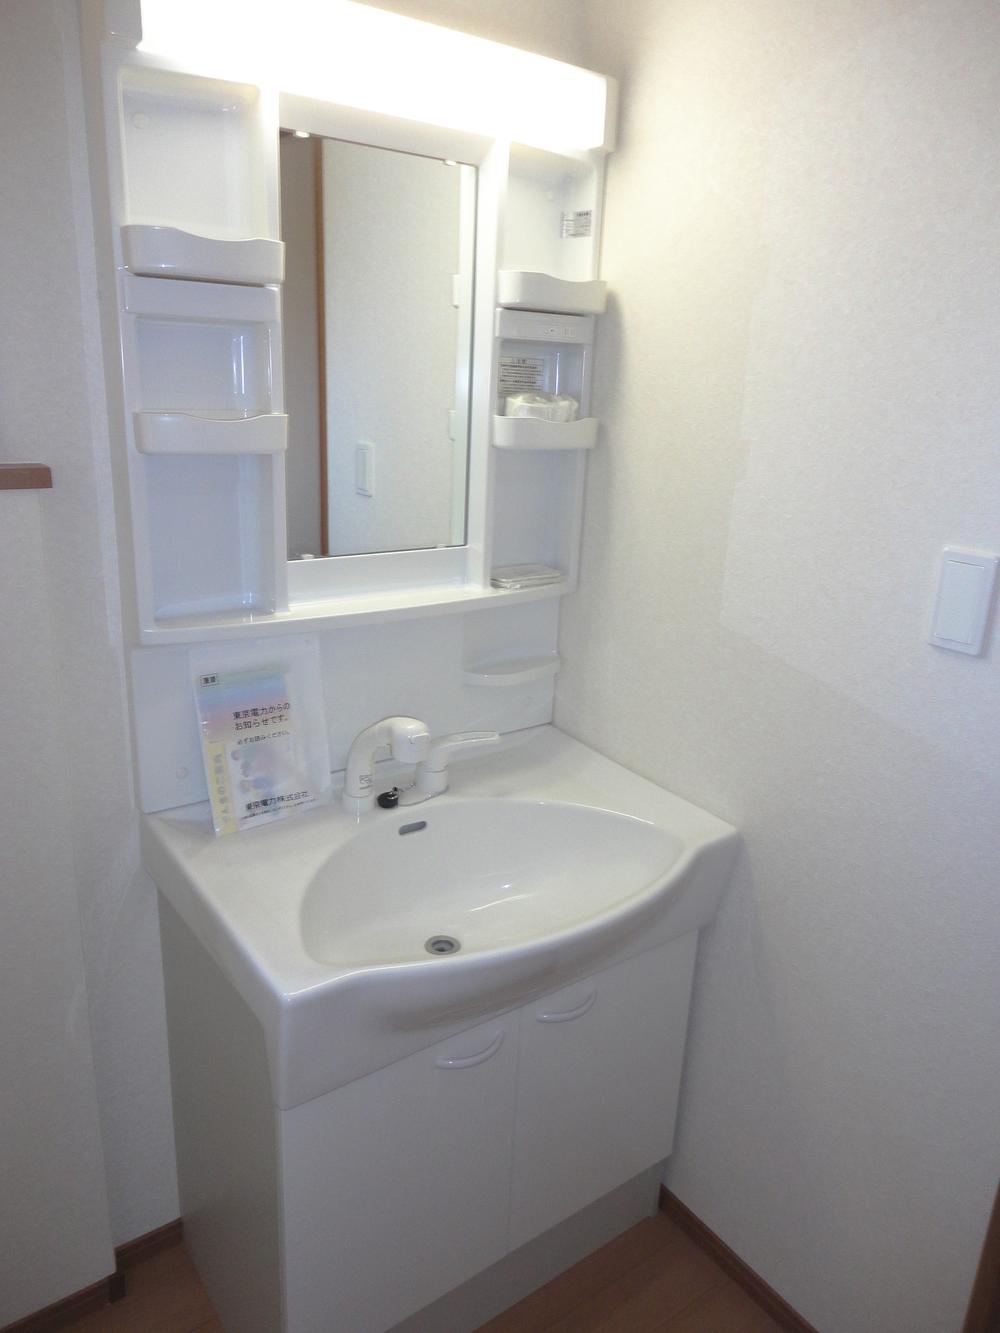 Wash basin, toilet. Washbasin spray shower head - the same specification